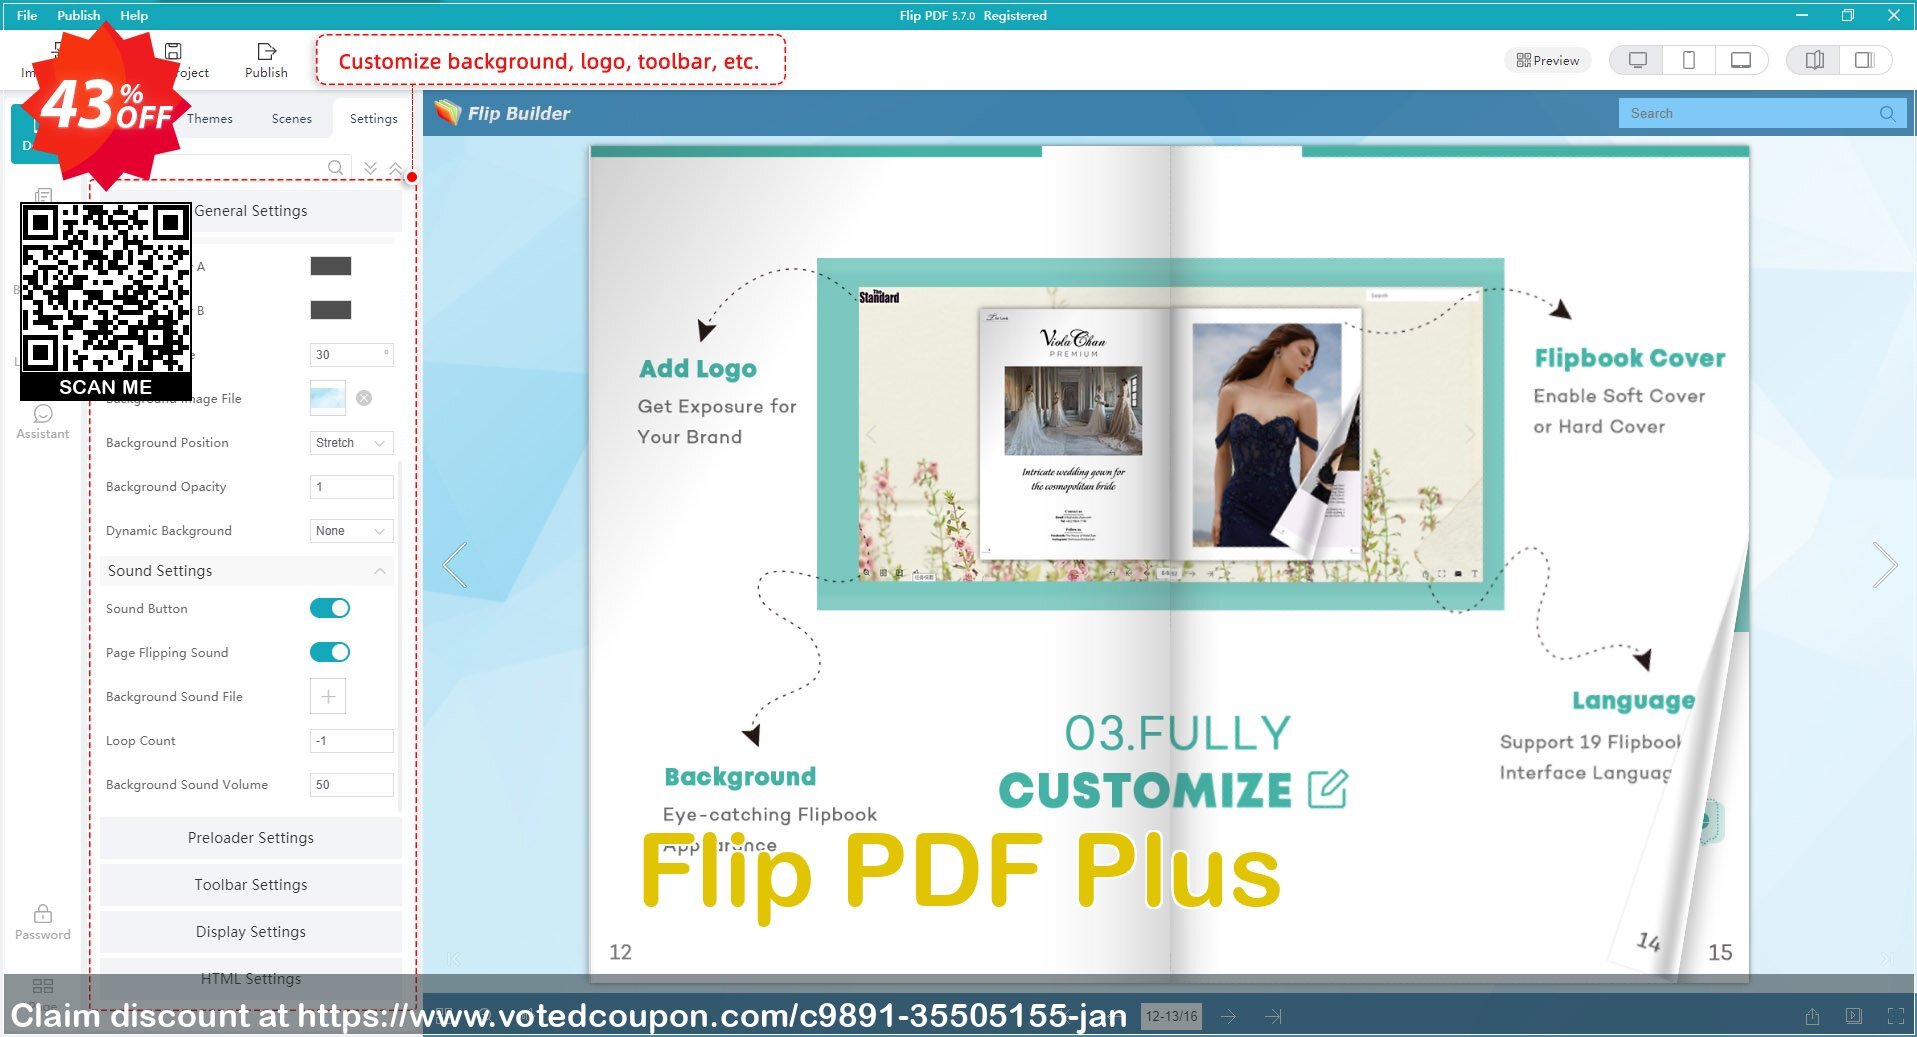 Flip PDF Plus voted-on promotion codes